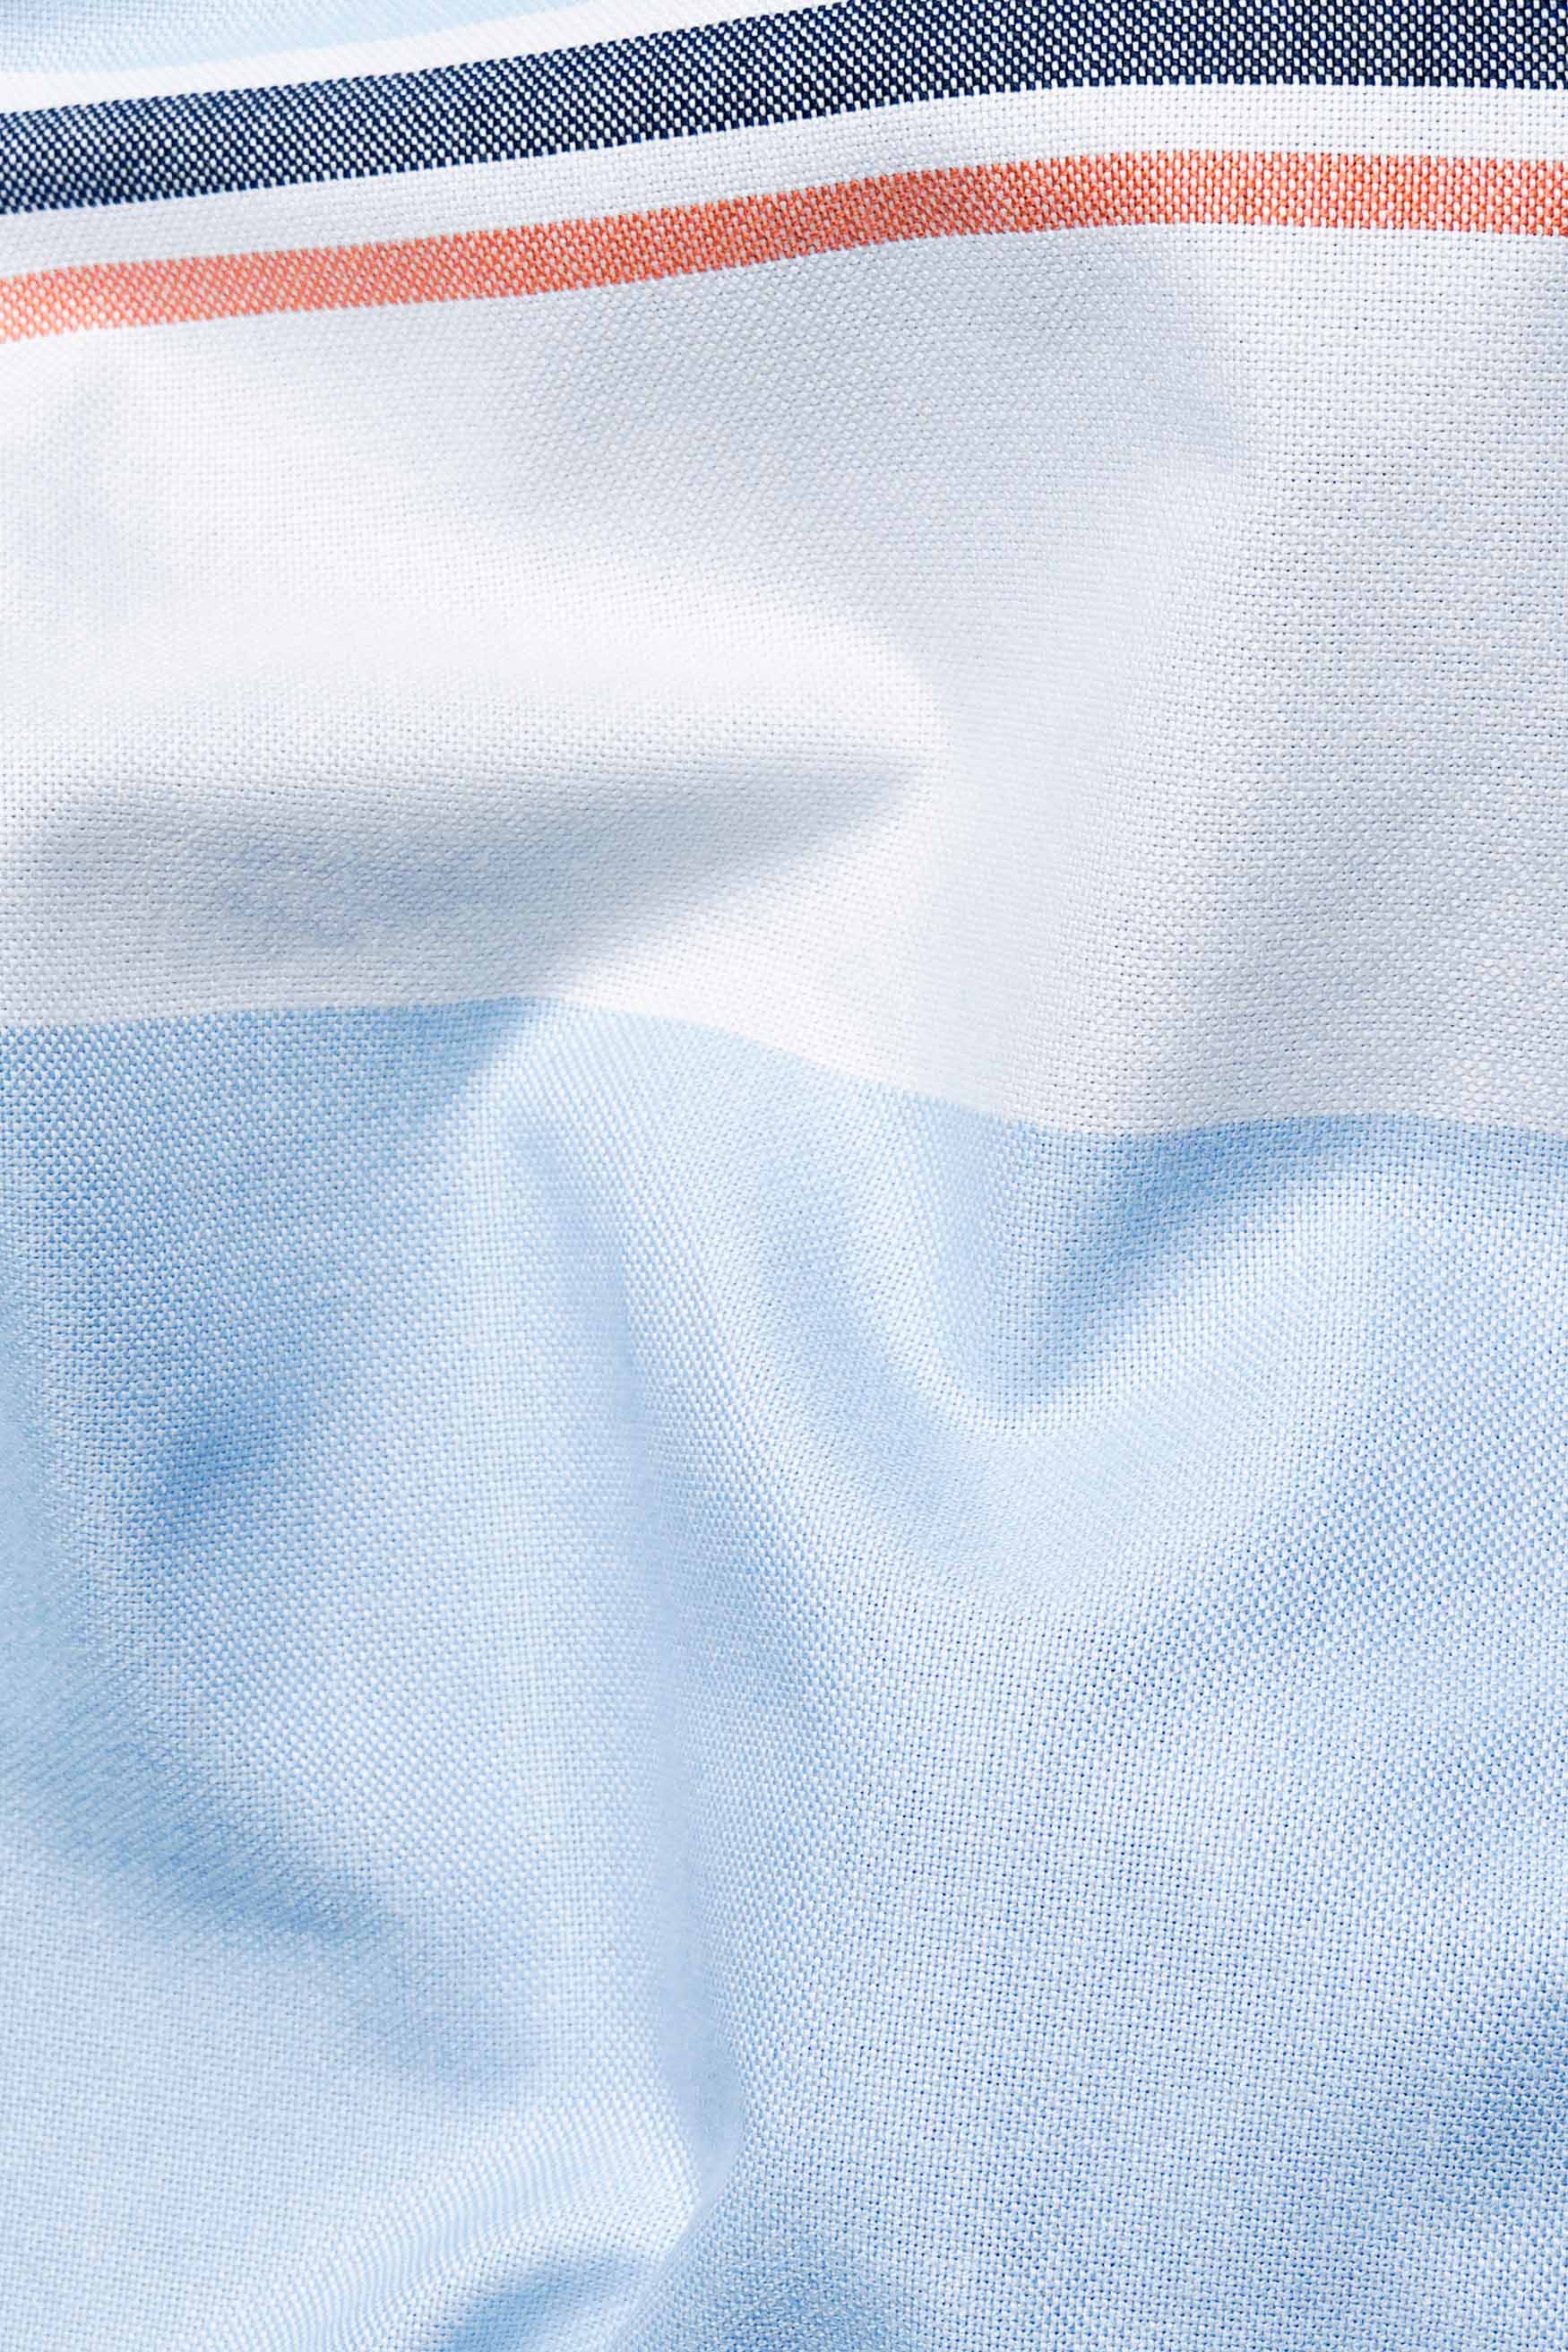 Beau Blue and Bright White Multicolour Striped Royal Oxford Shirt